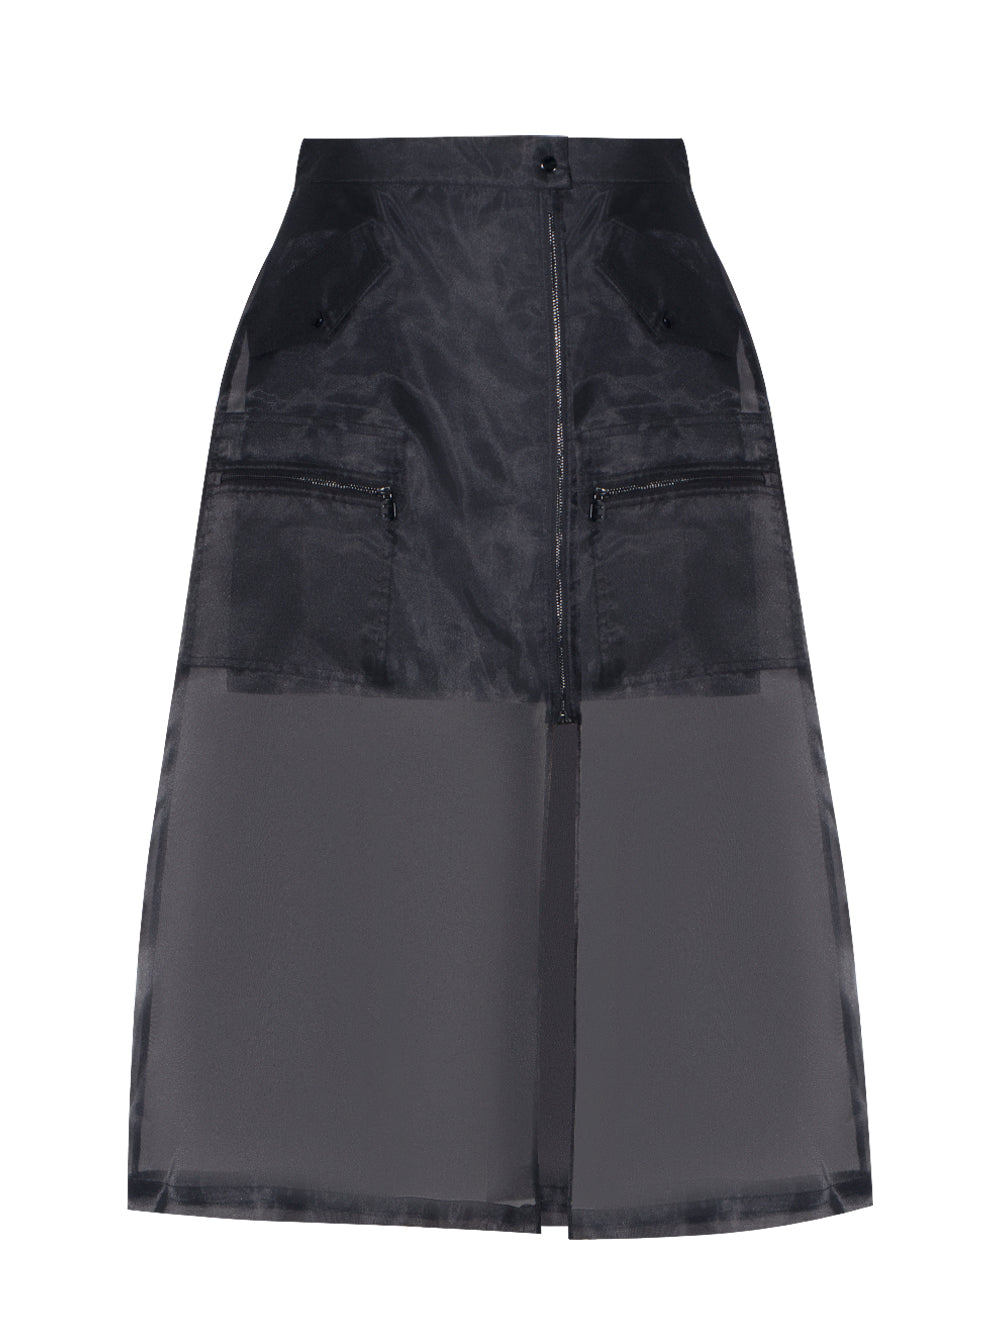 Organza Cargo Skirt (Black)